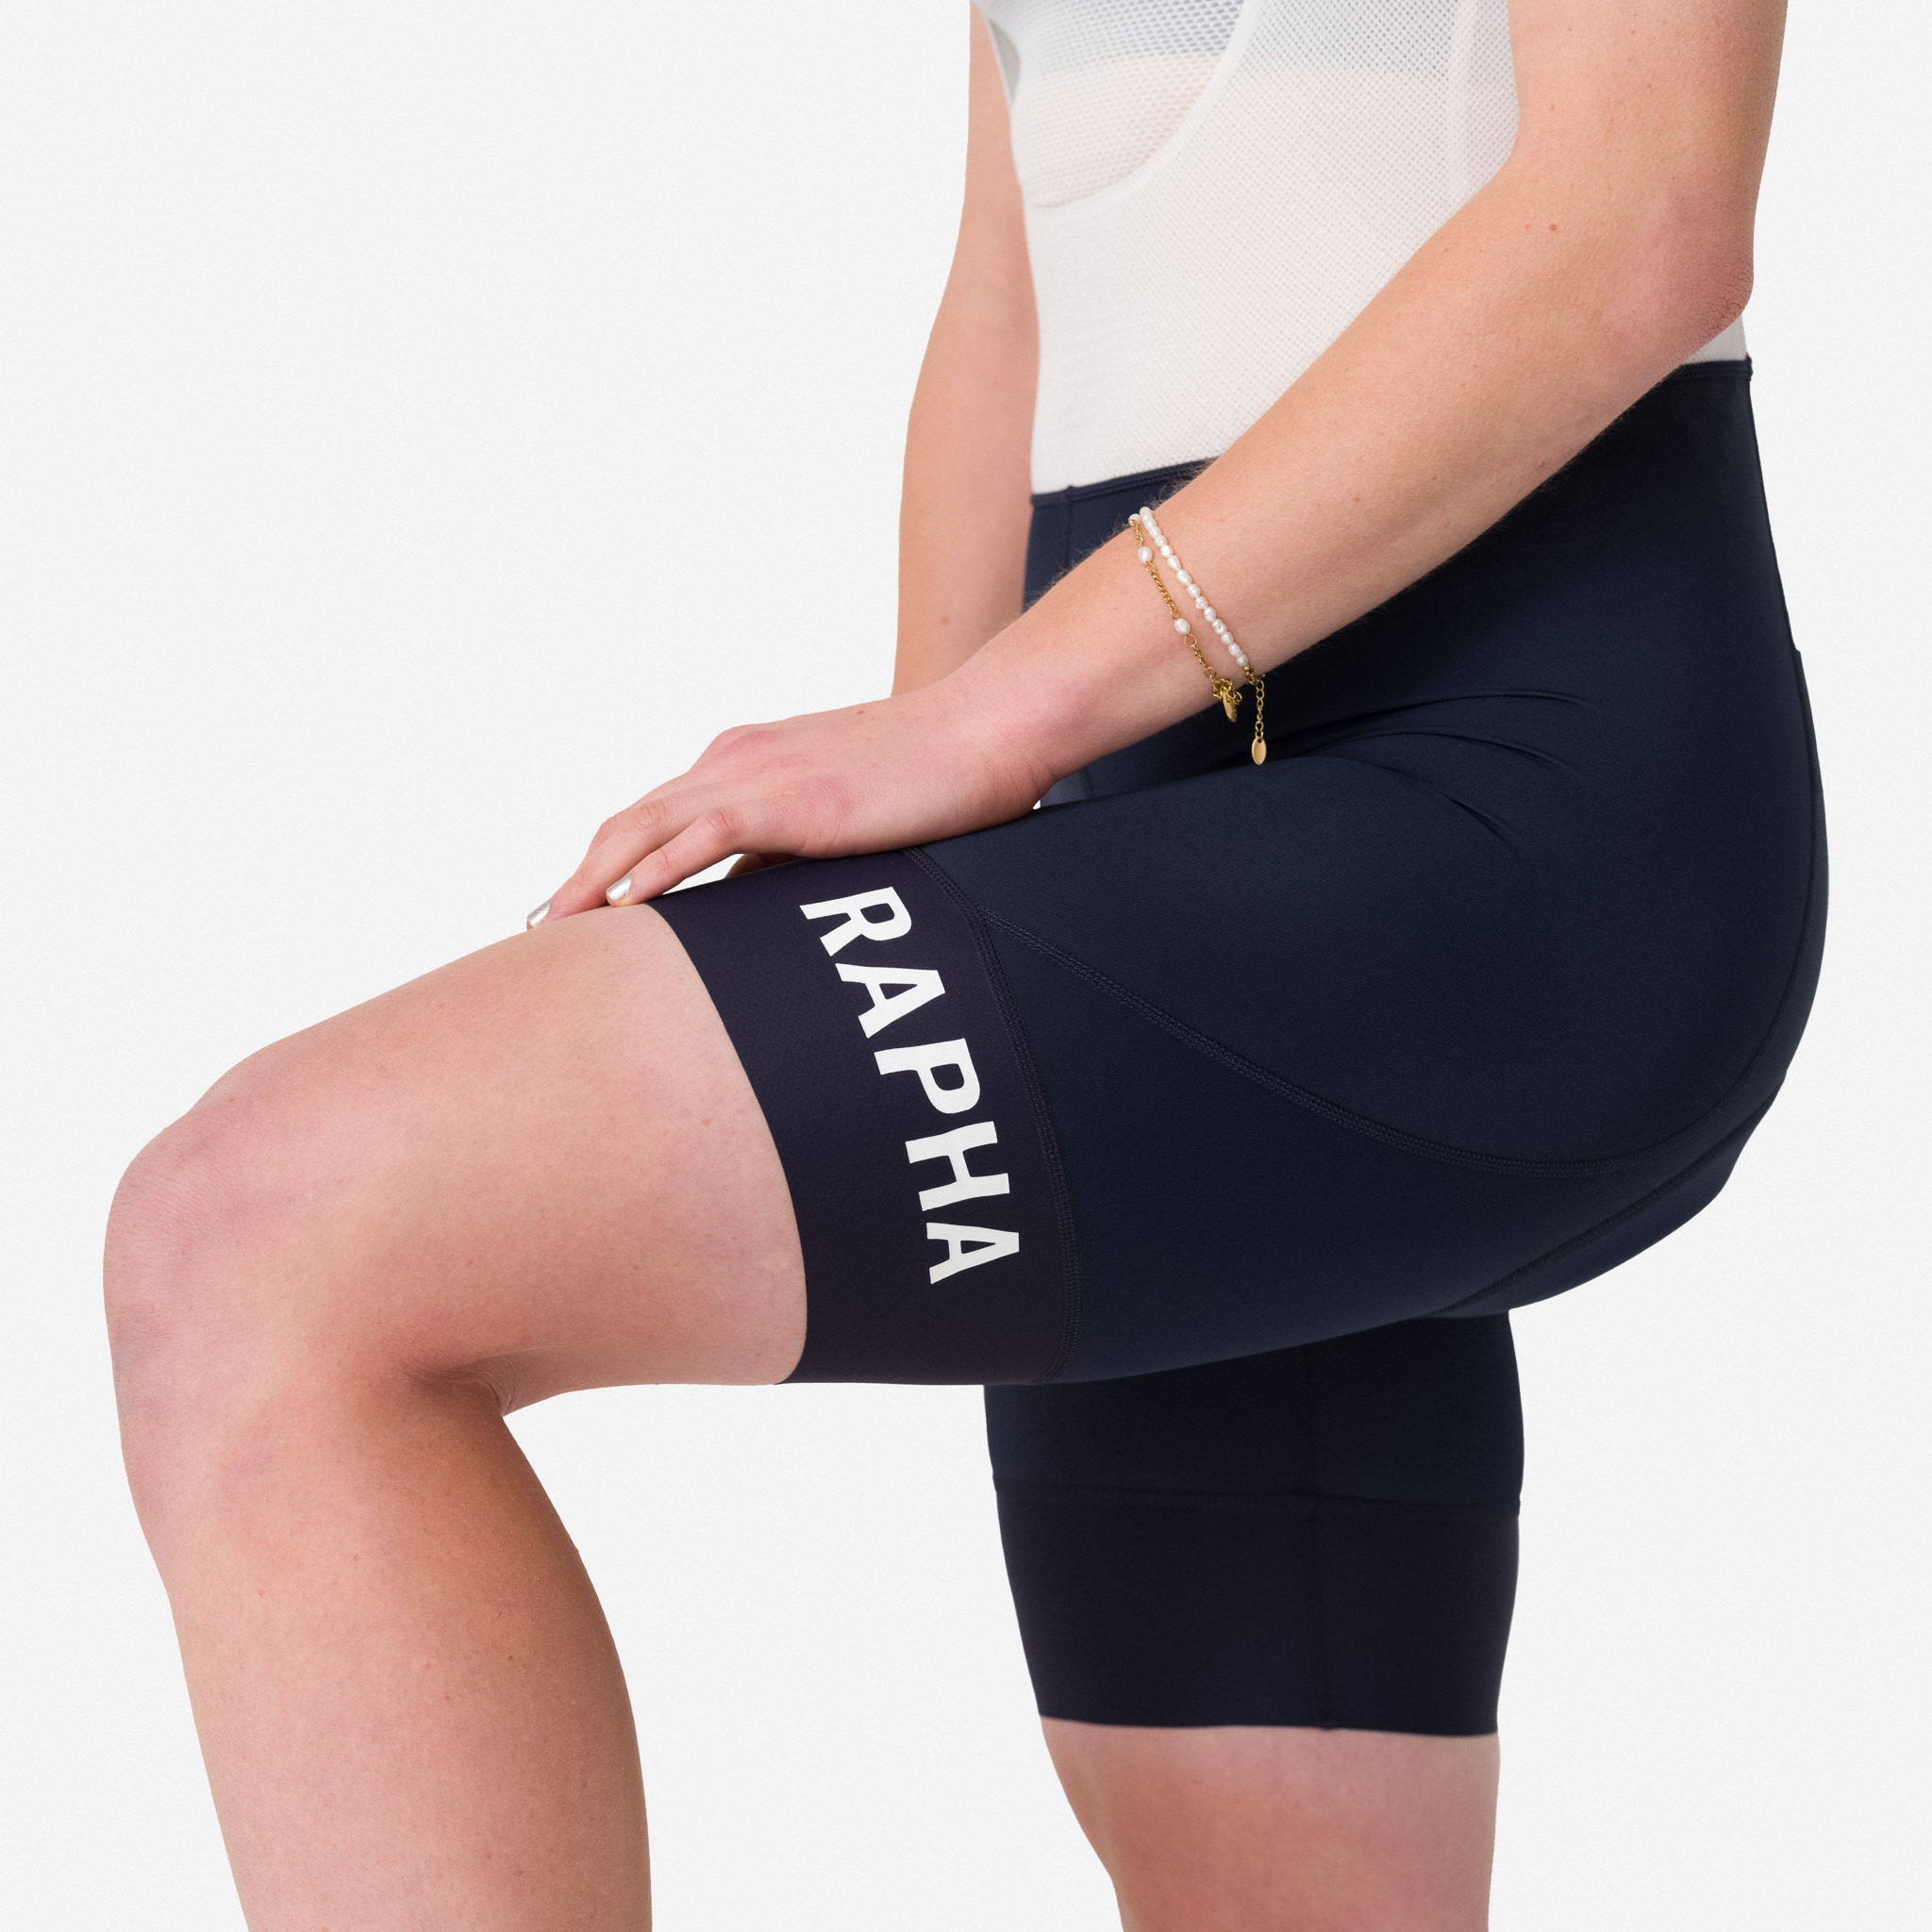 Women's Pro Team Bib Shorts - Short | Comfortable Cycling Bibs for 